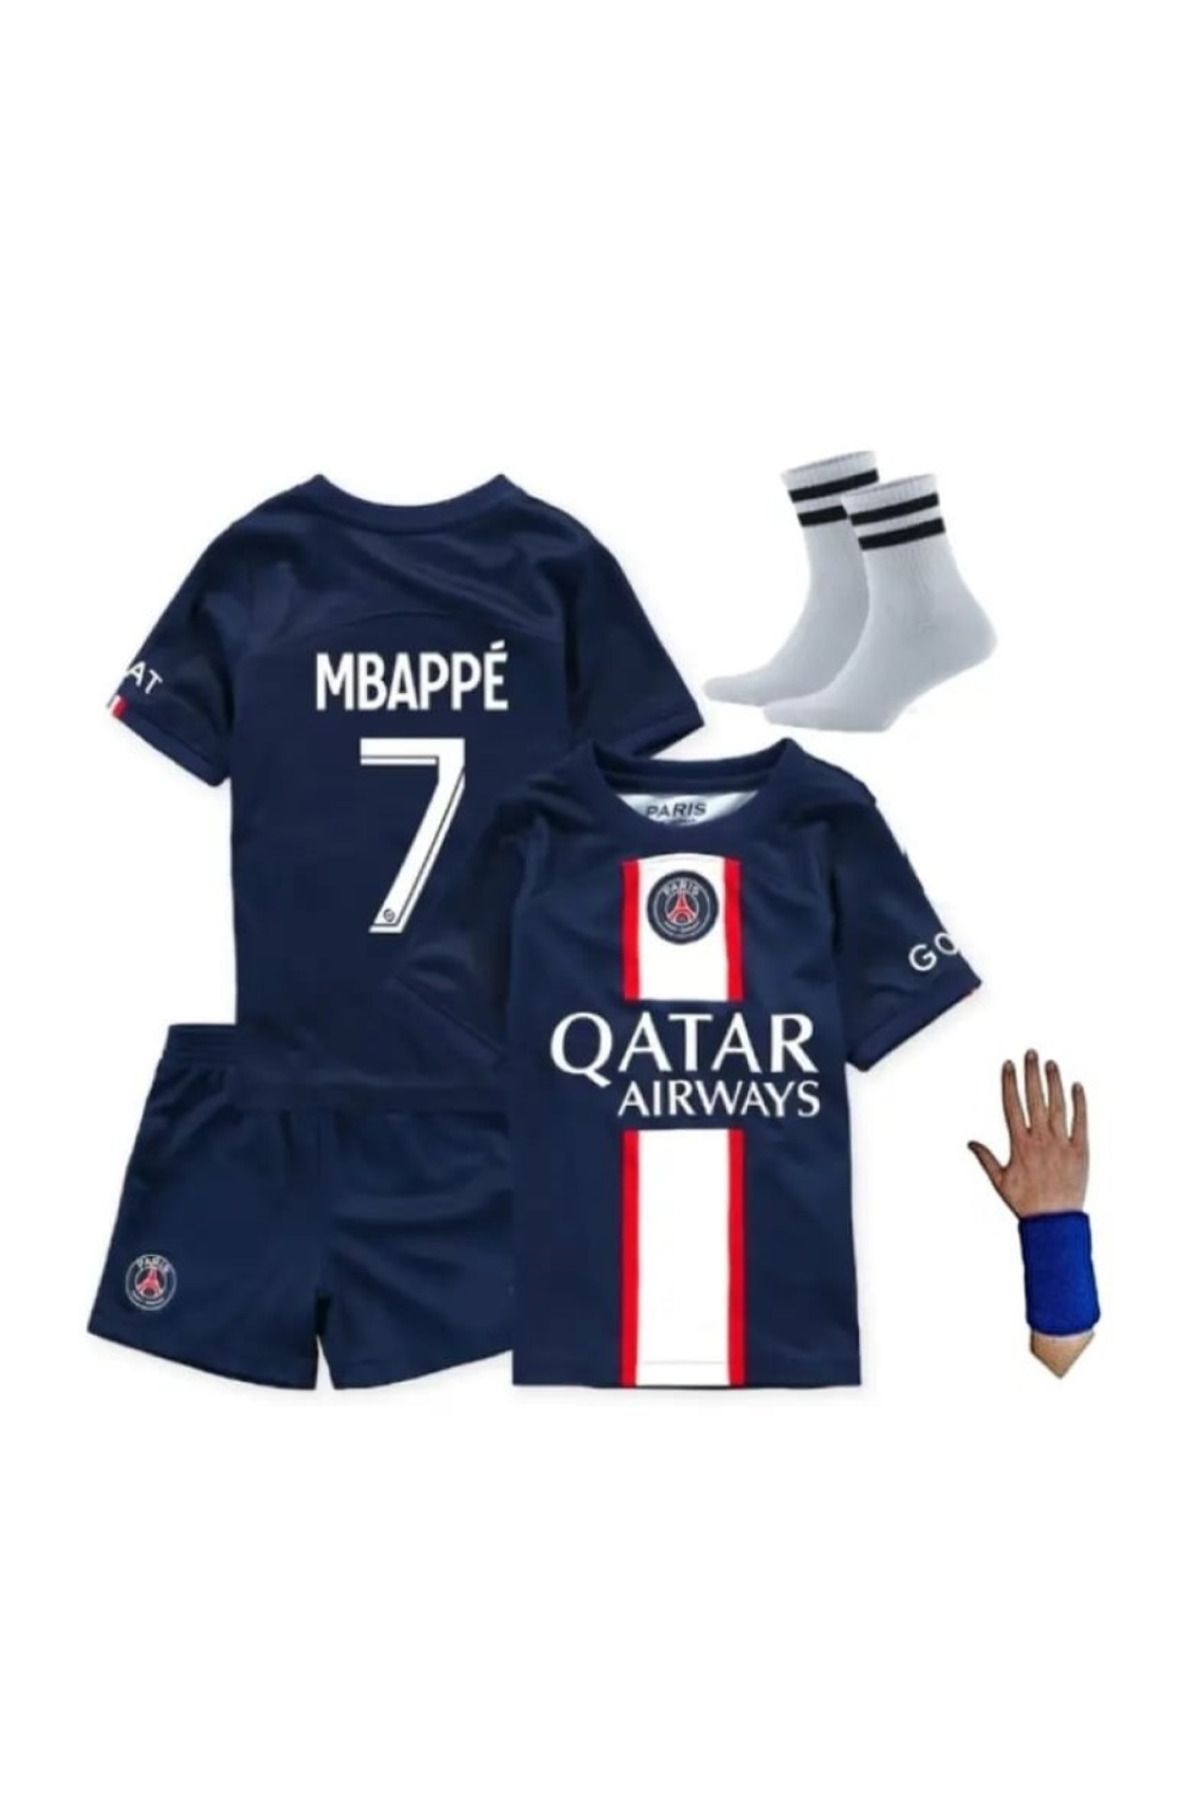 gökmenspor Paris Saint-germain Mbappe Lacivert Iç Saha Çocuk Futbol Forması 4'lü Set Eski Sezon Retro Forma